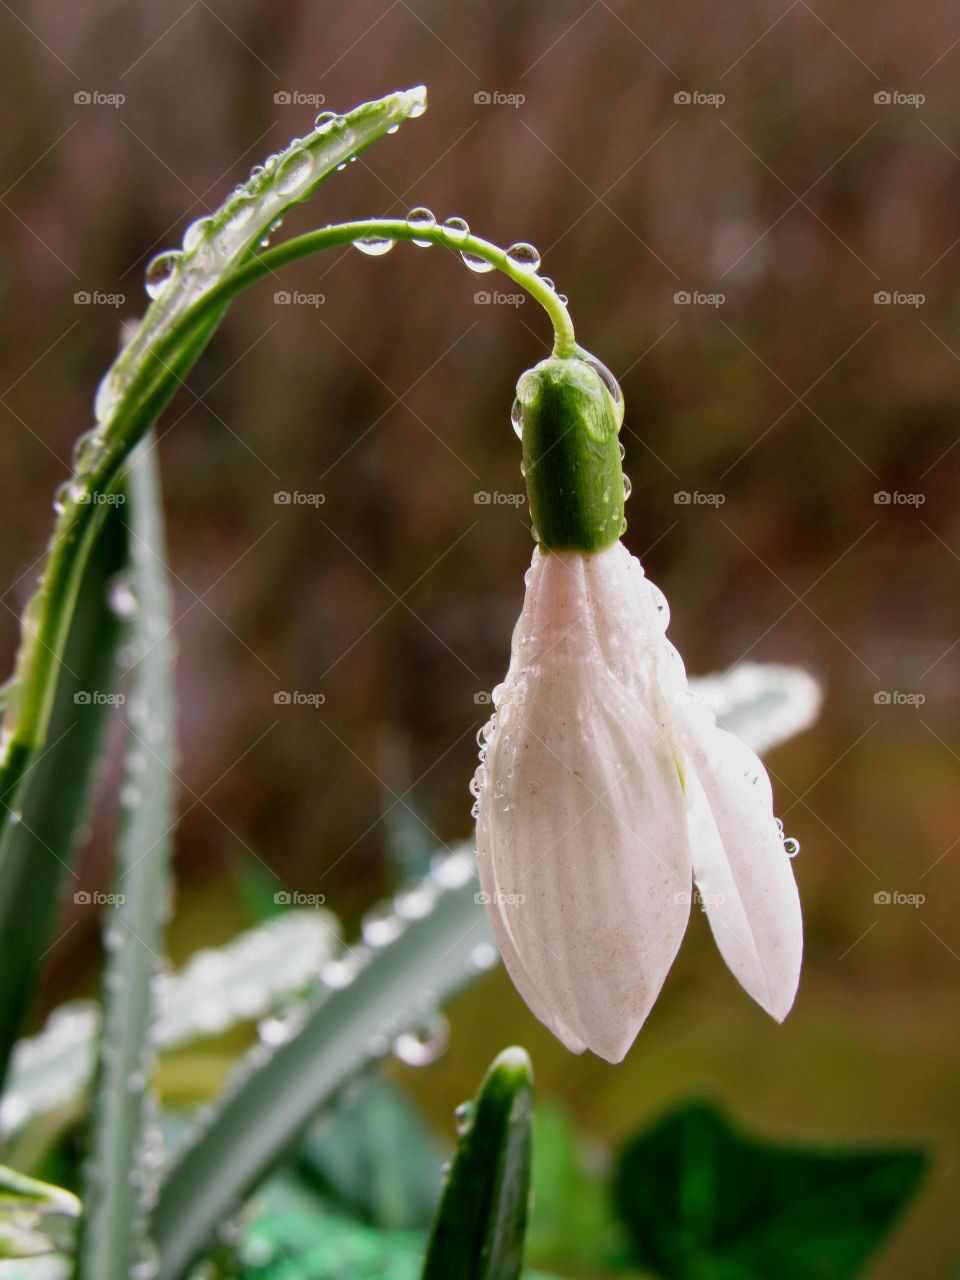 Water drops on snowdrop flower